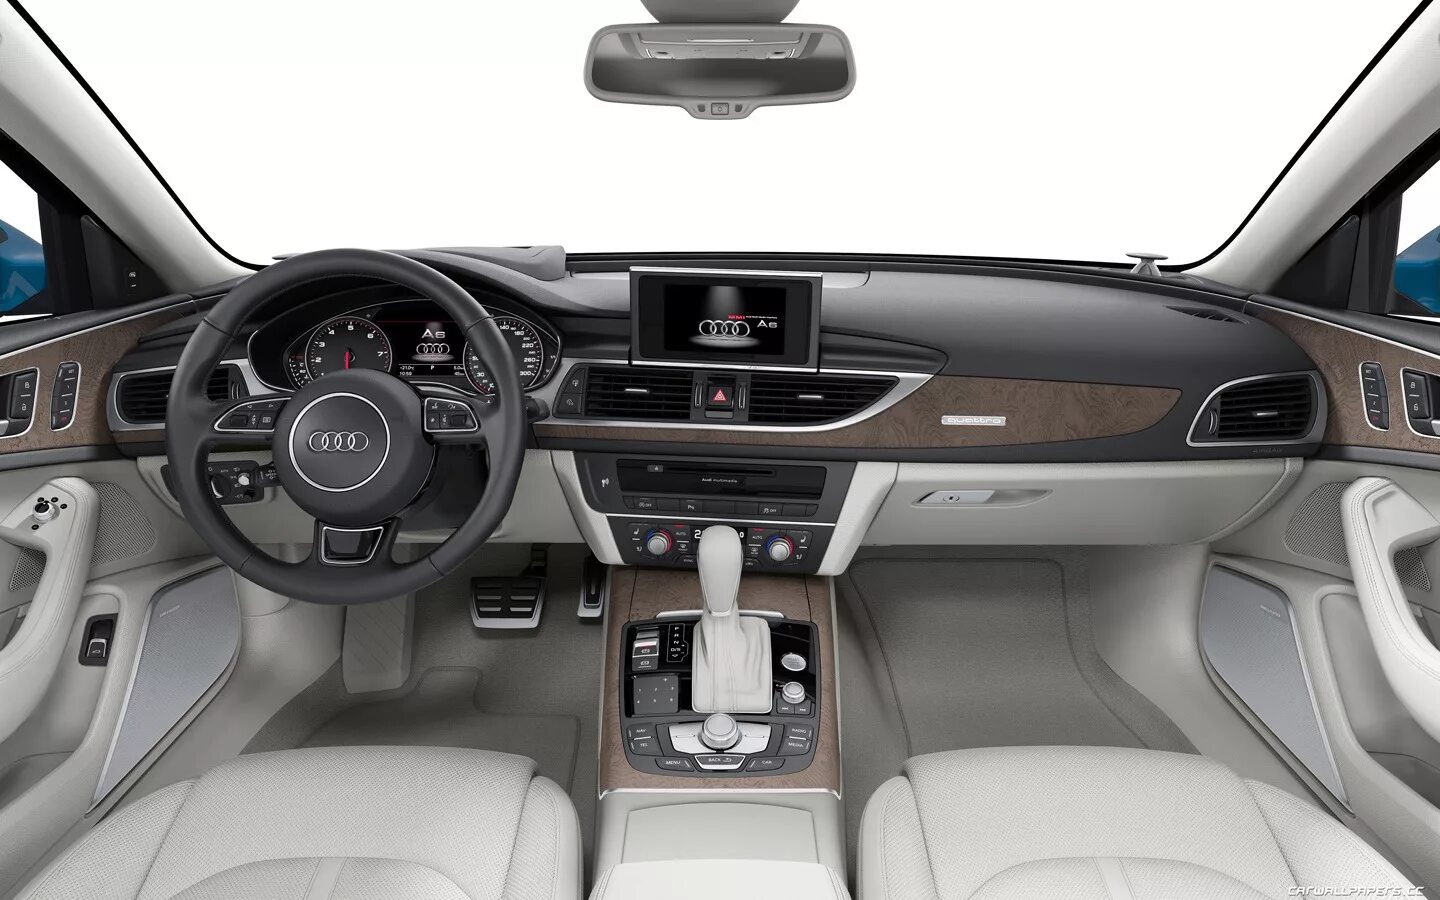 3 000 с 6 000 2. Audi a6 2015 салон. Audi a6 2017 салон. Audi a6 Interior 2015. Audi a6 2012 Interior.